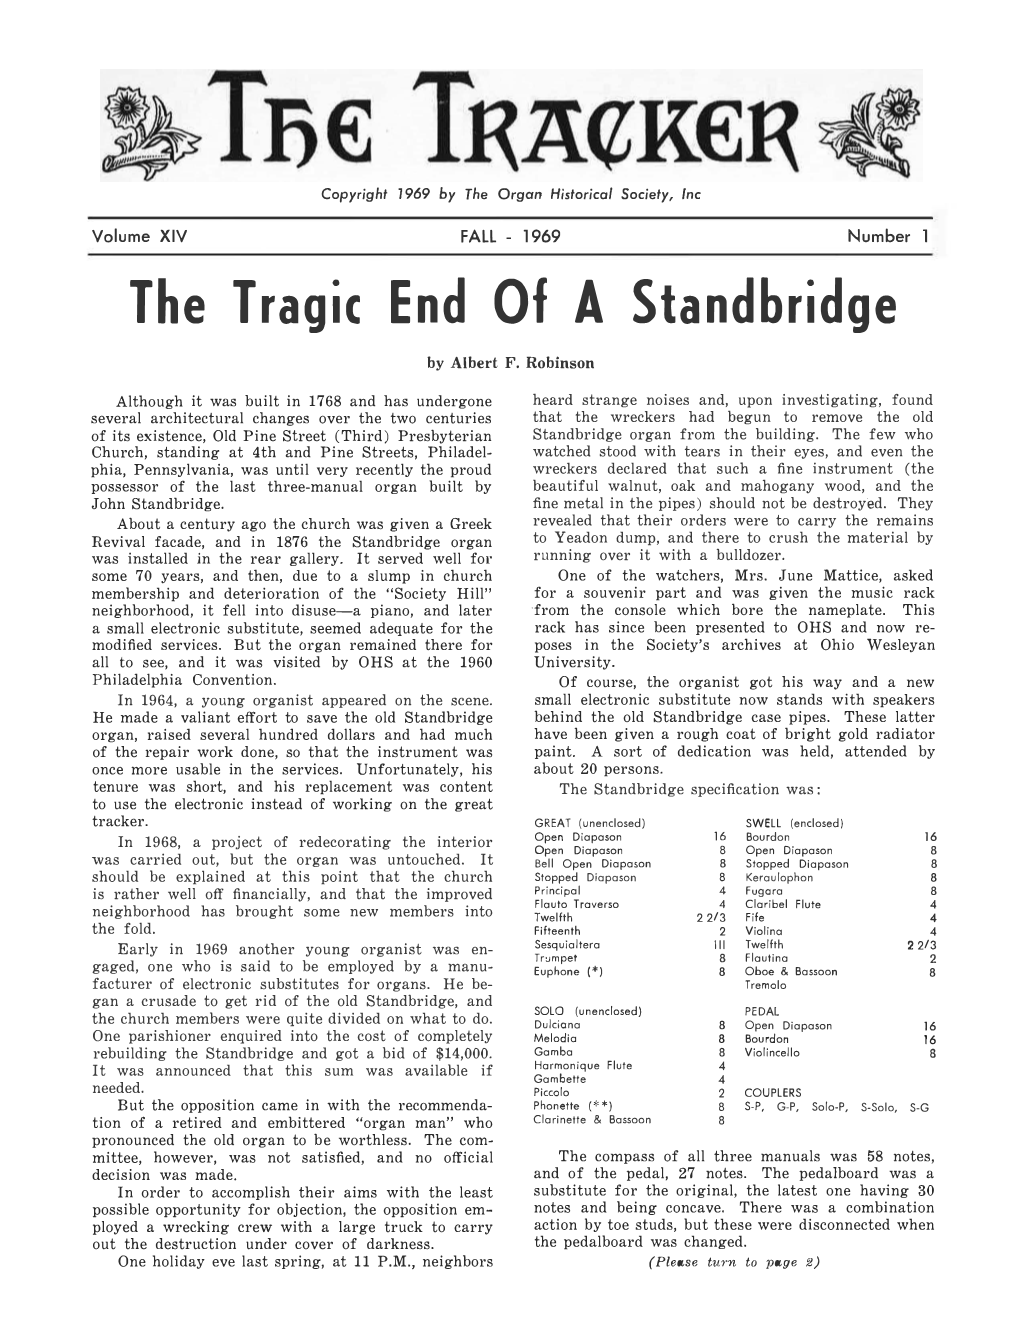 The Tragic End of a Standbridge by Albert F